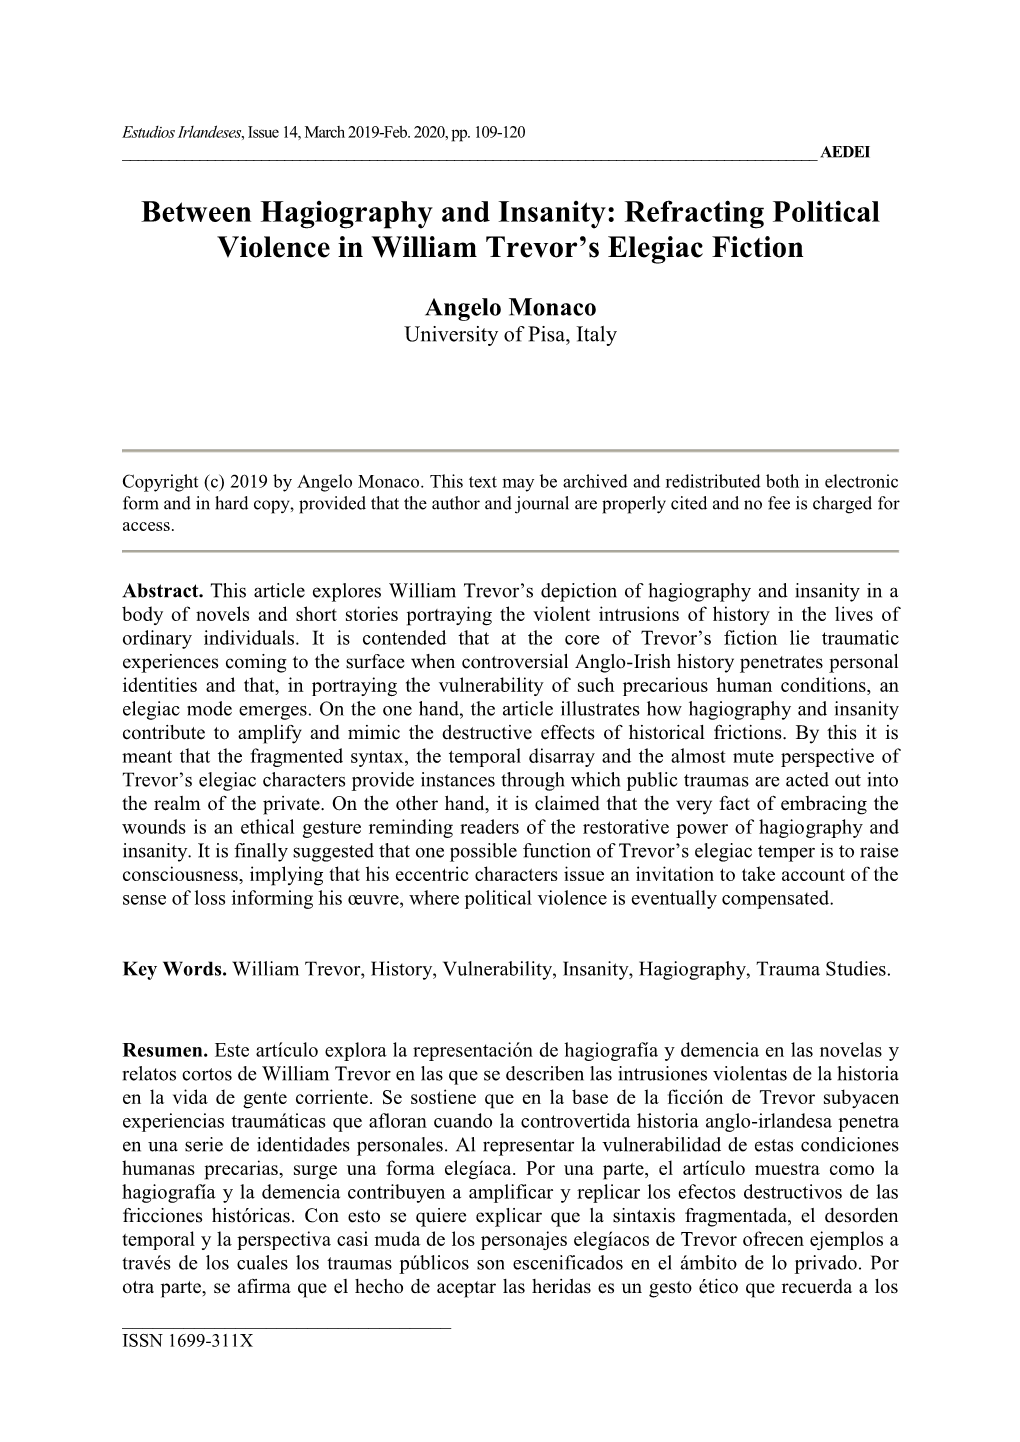 Refracting Political Violence in William Trevor's